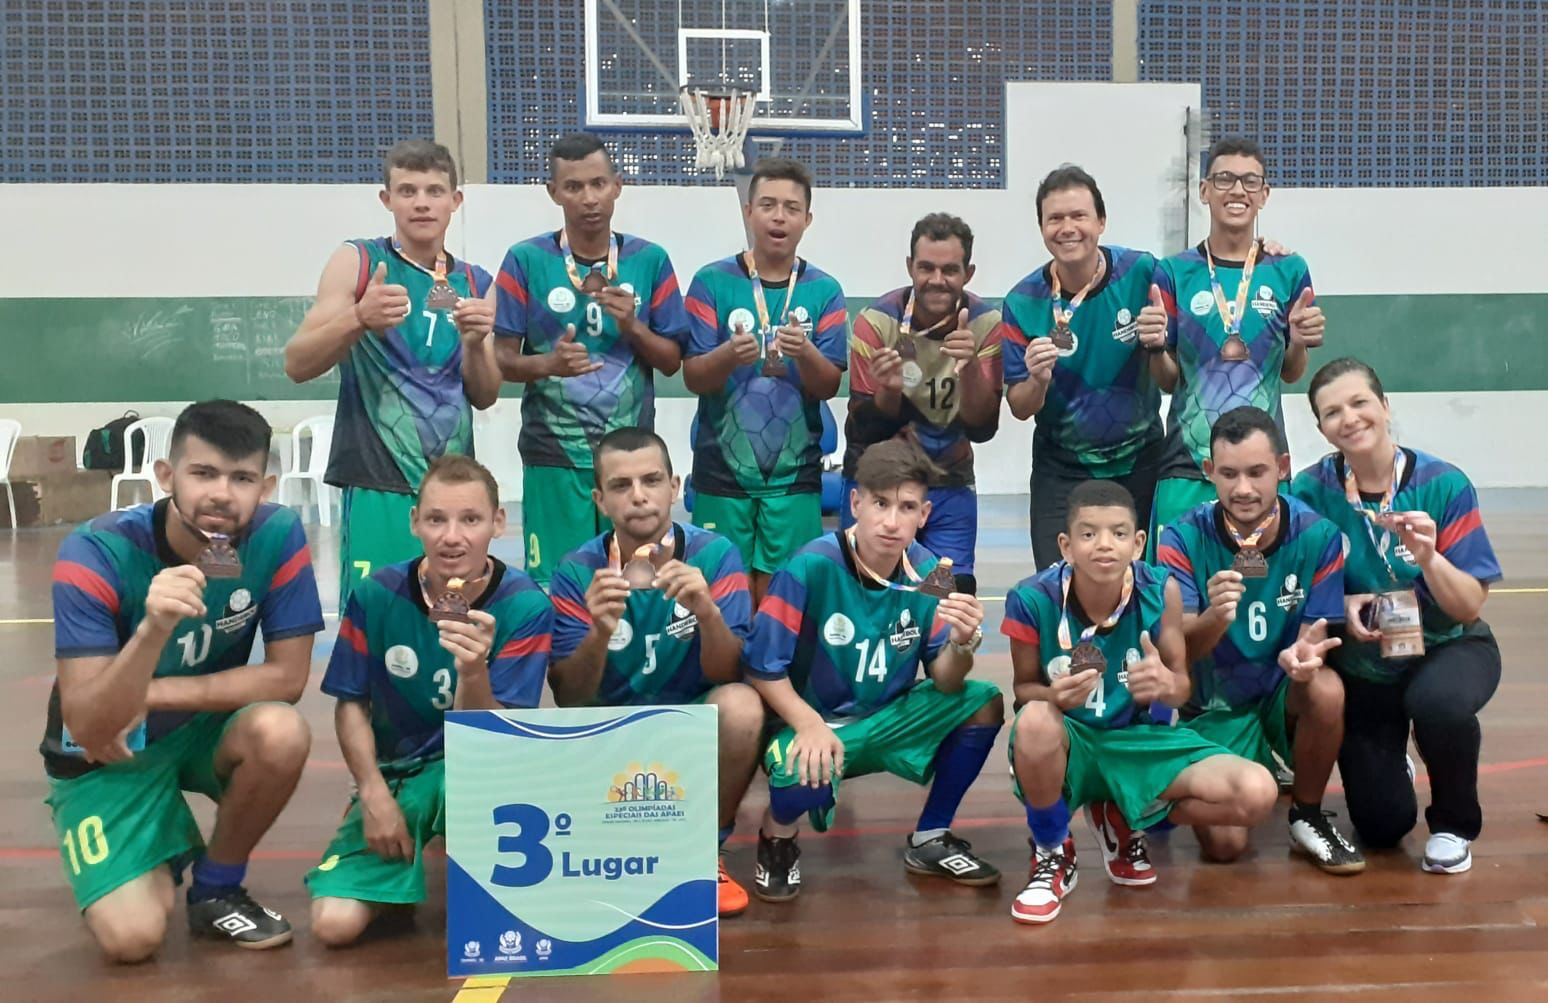 UNINASSAU realiza I Copa de Futsal